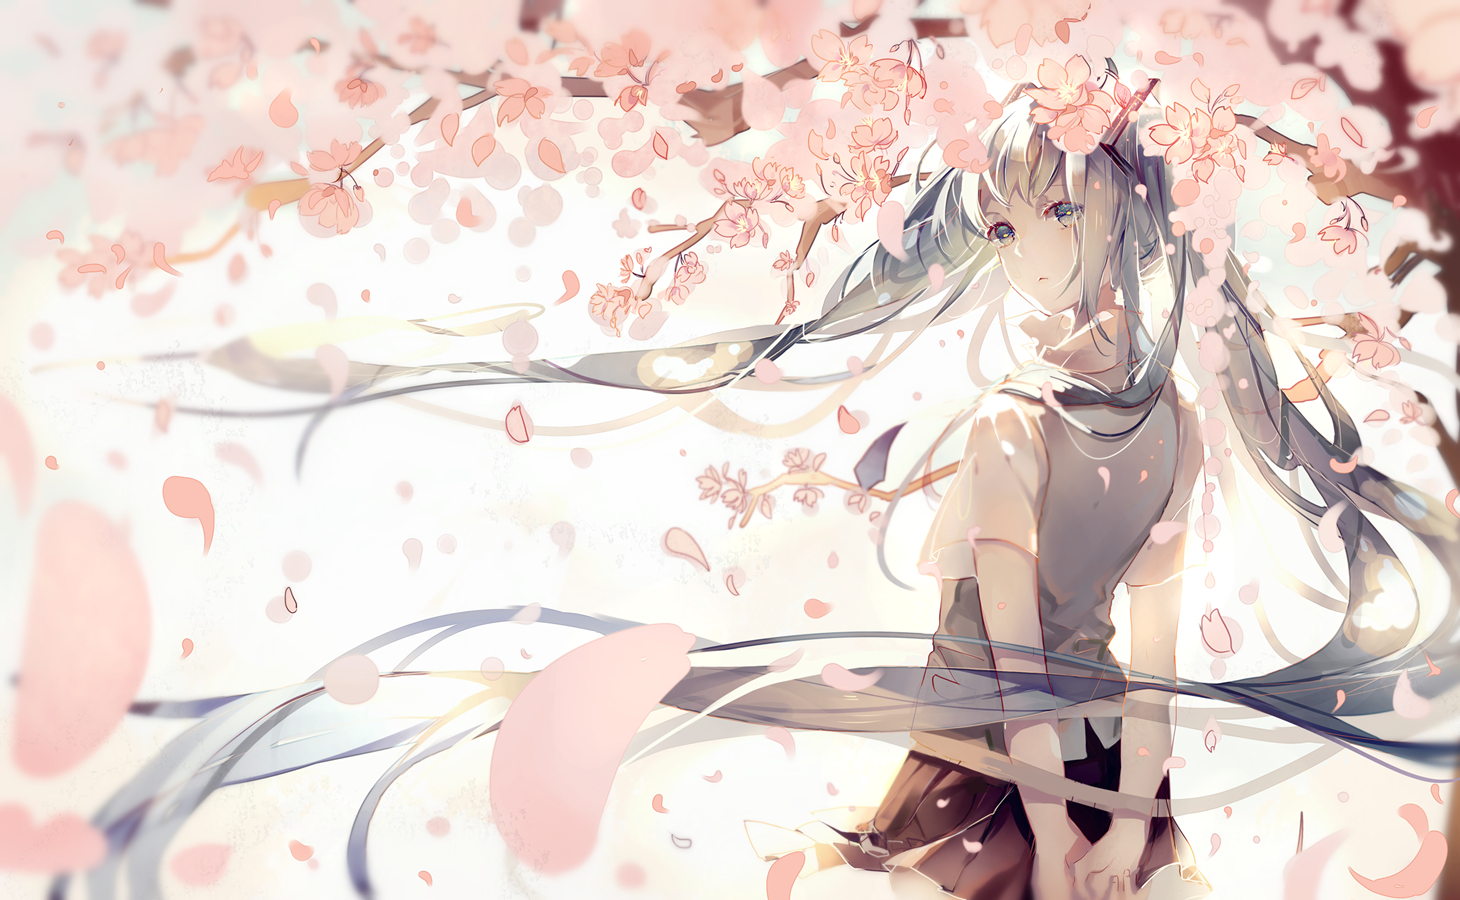 Hatsune Miku Cherry Tree and Pink Flower Wallpaper and Background Imagex900